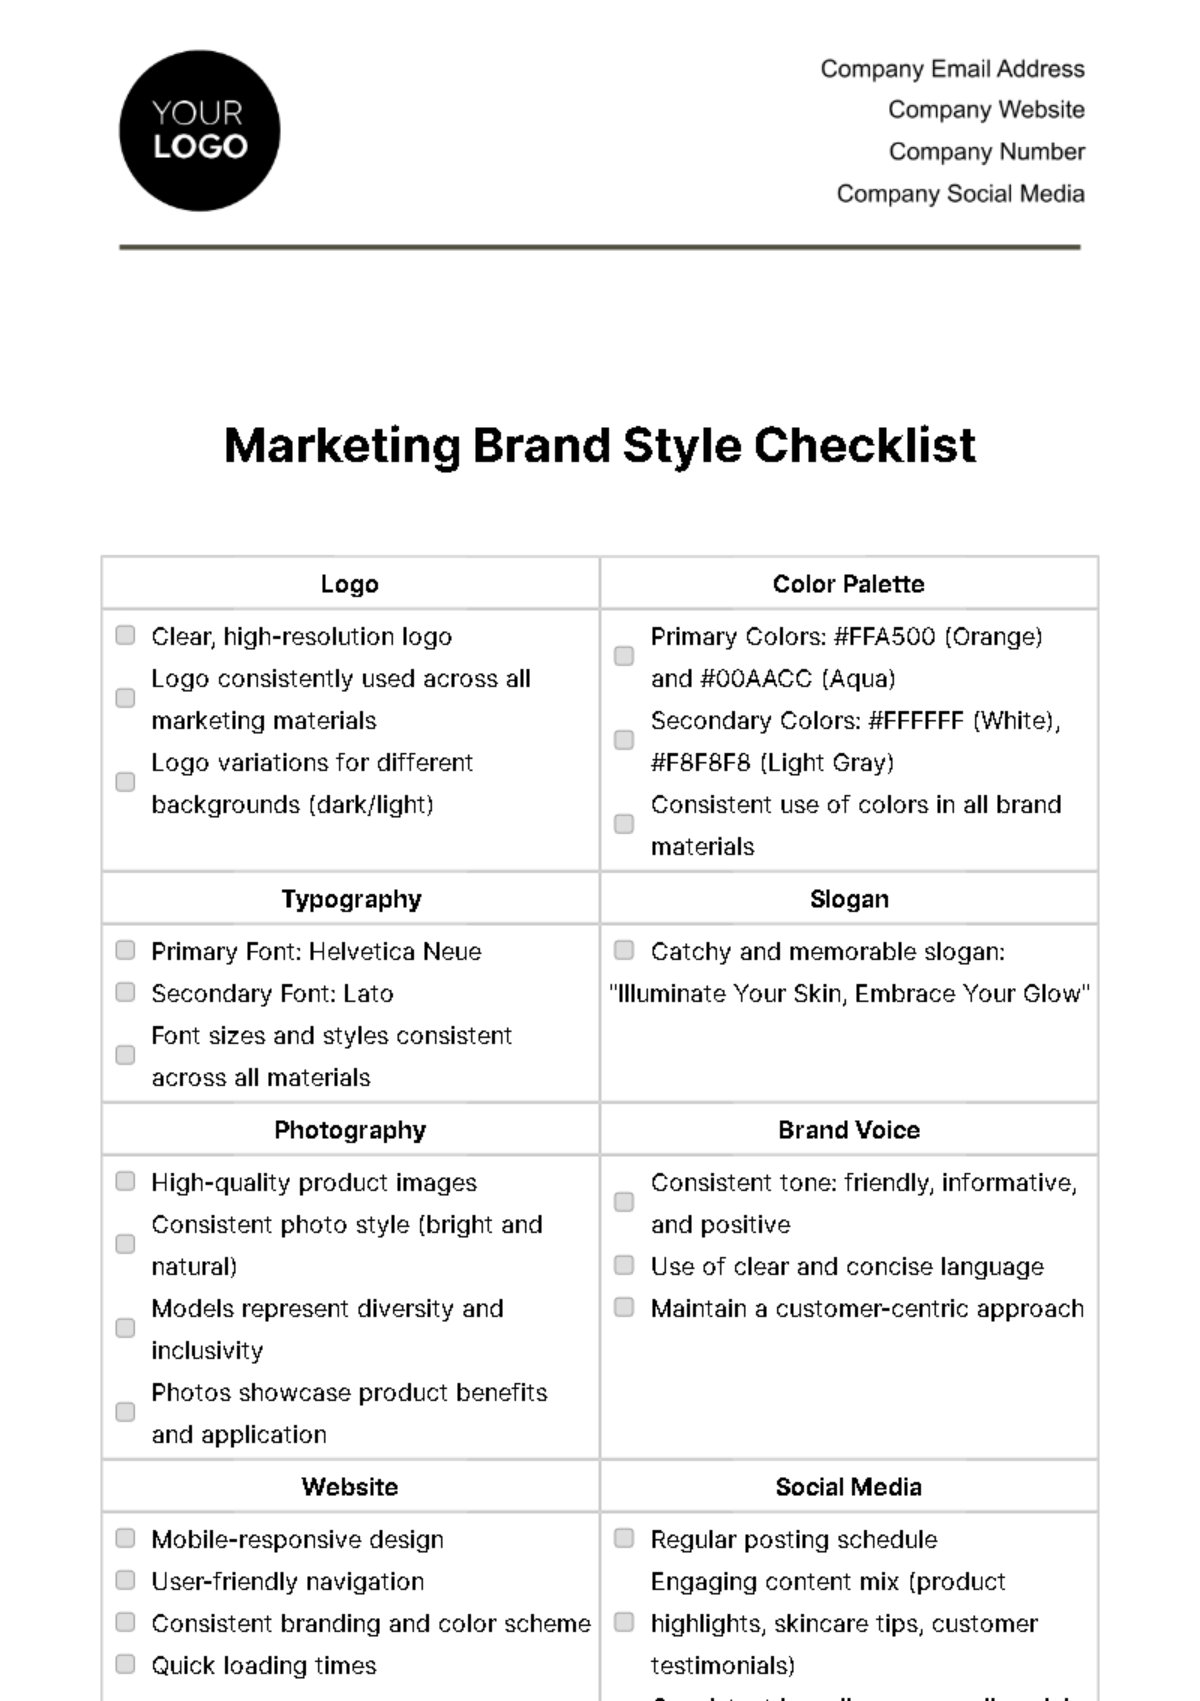 Free Marketing Brand Style Checklist Template